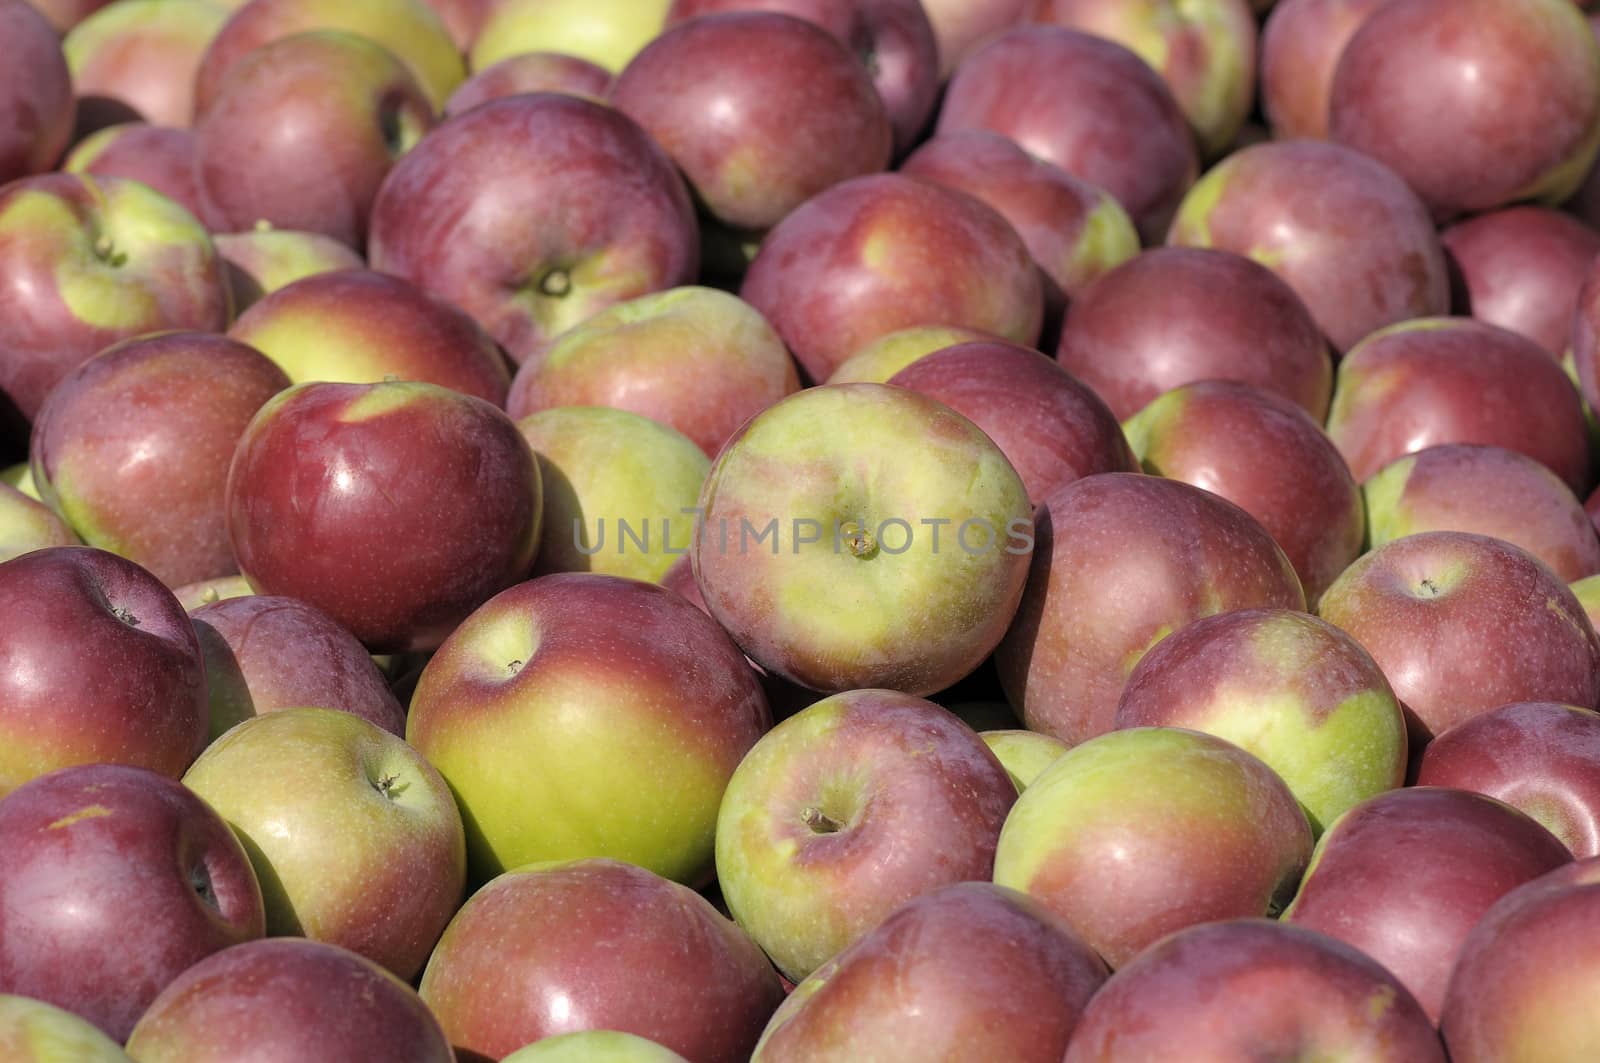  lot of apples macintosh fraichement picked background